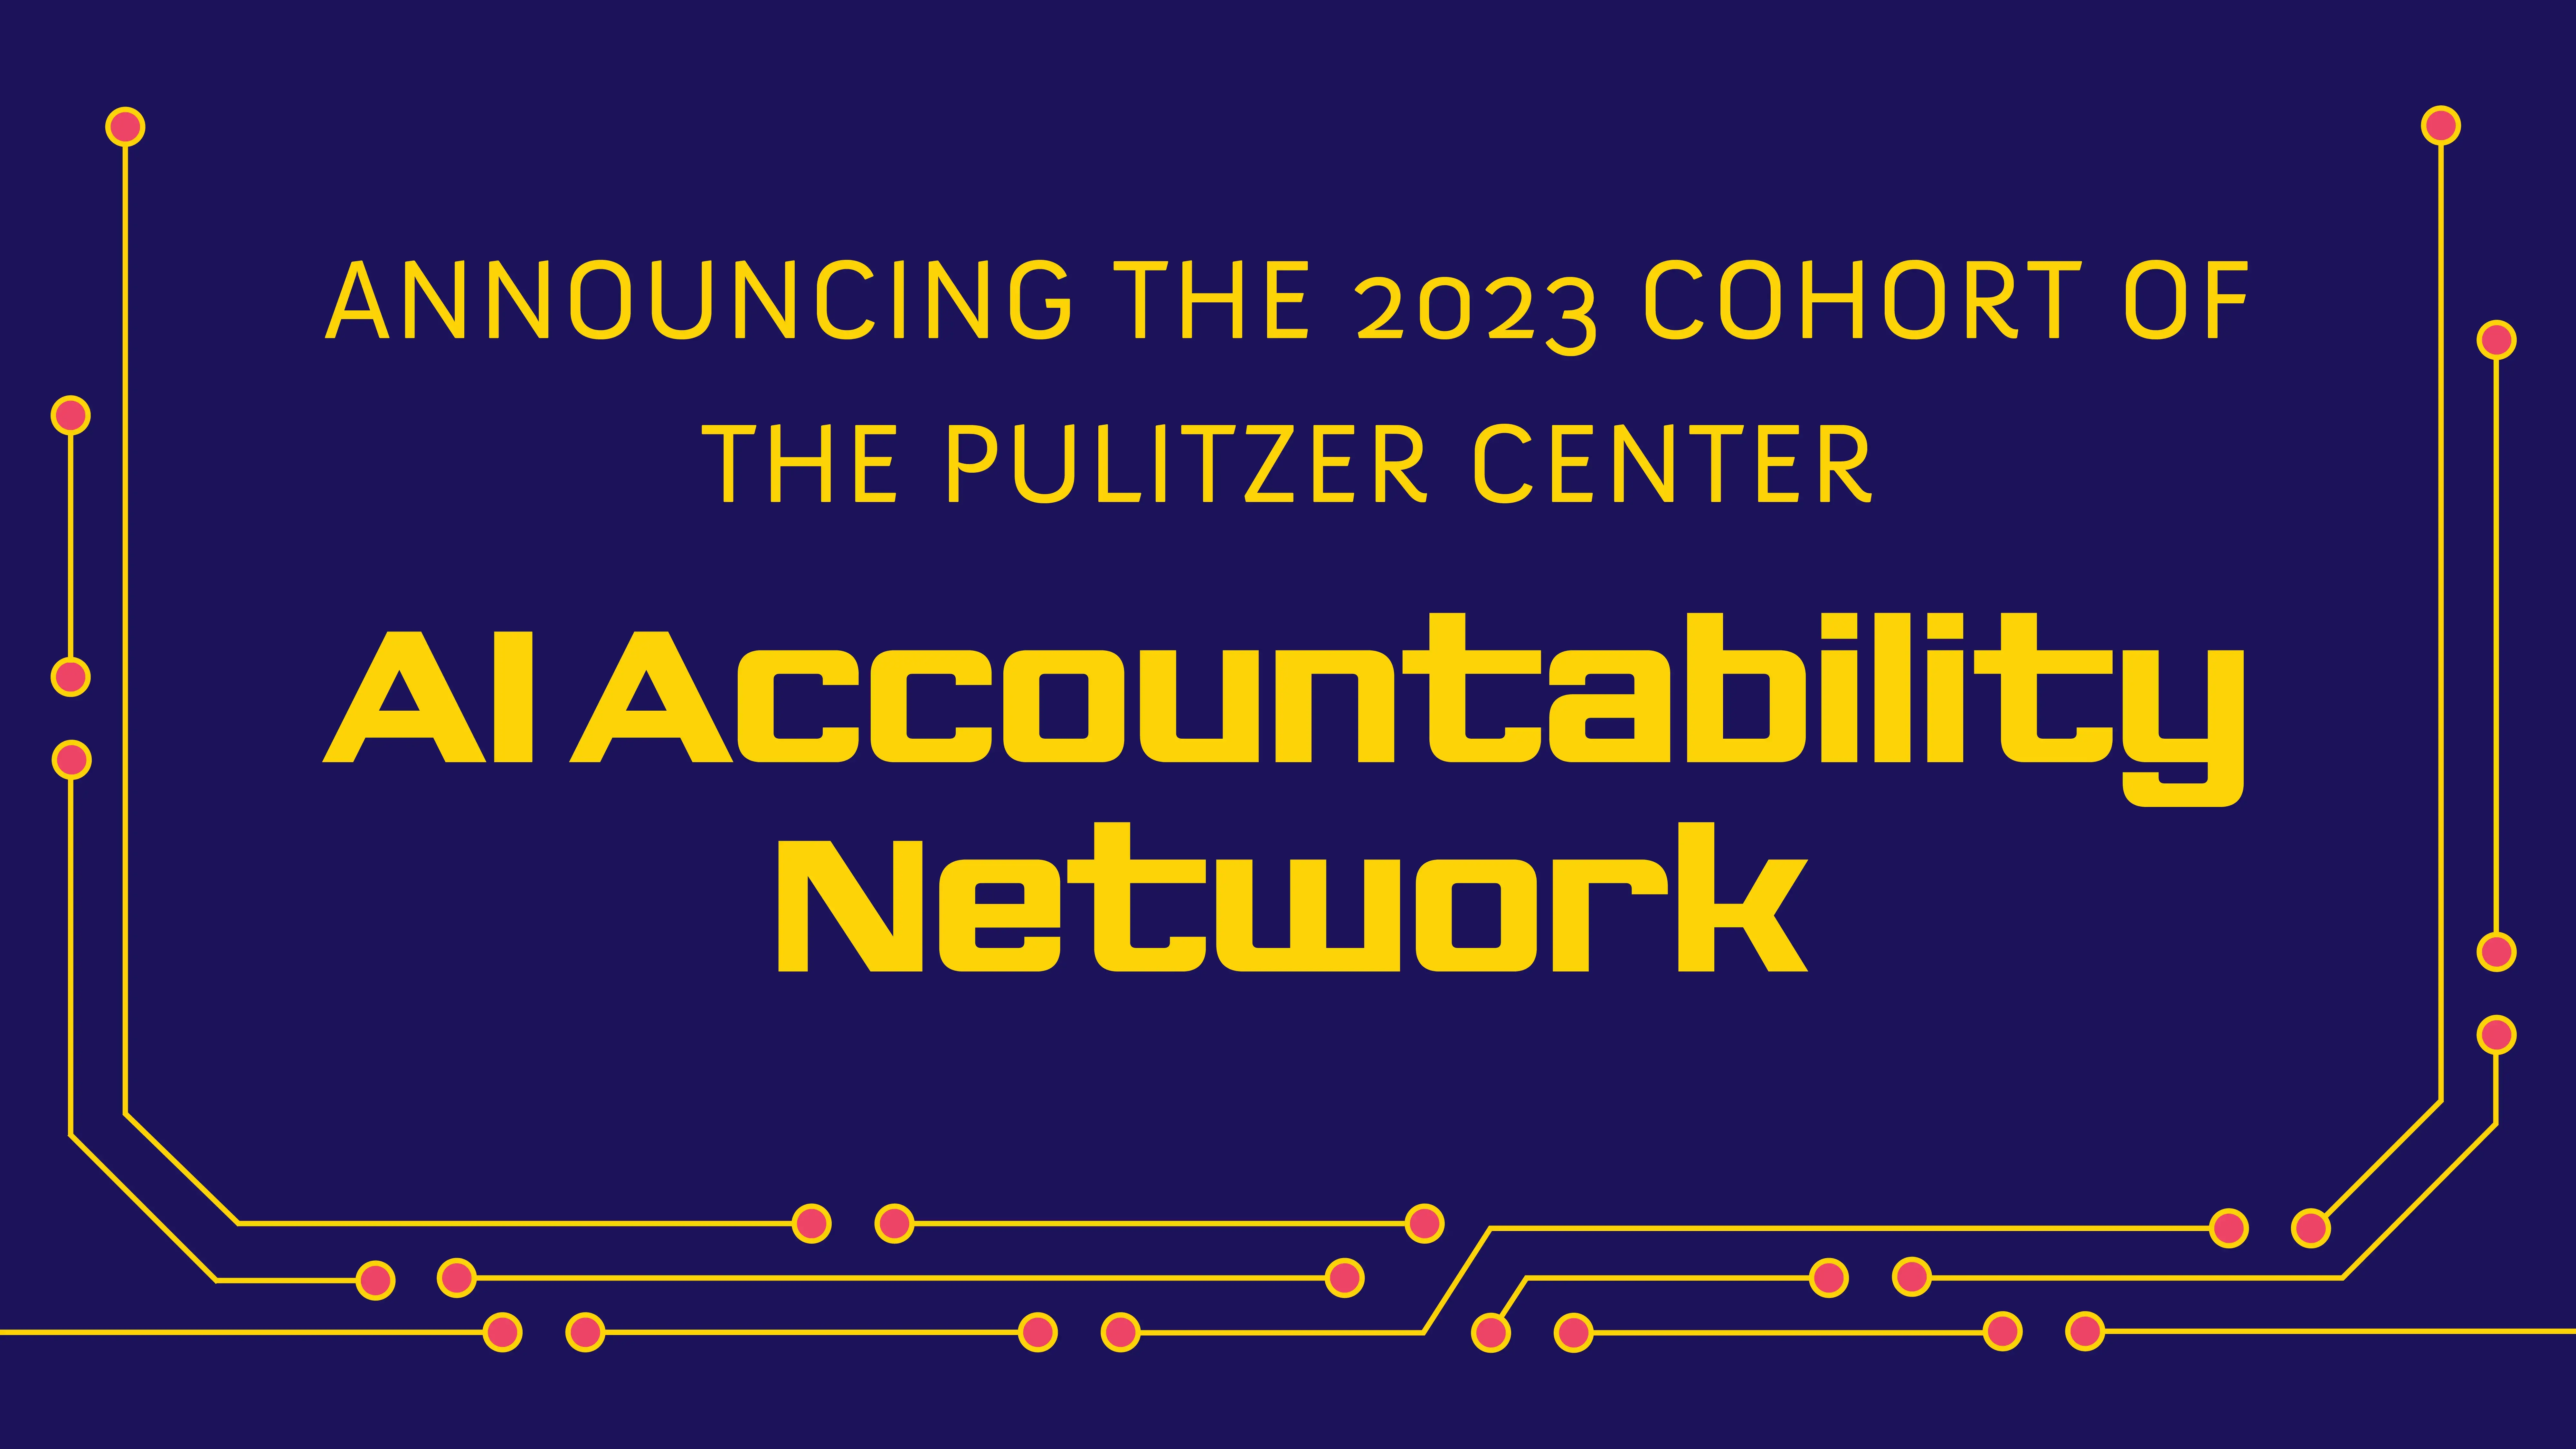 AI accountability network announcement graphic